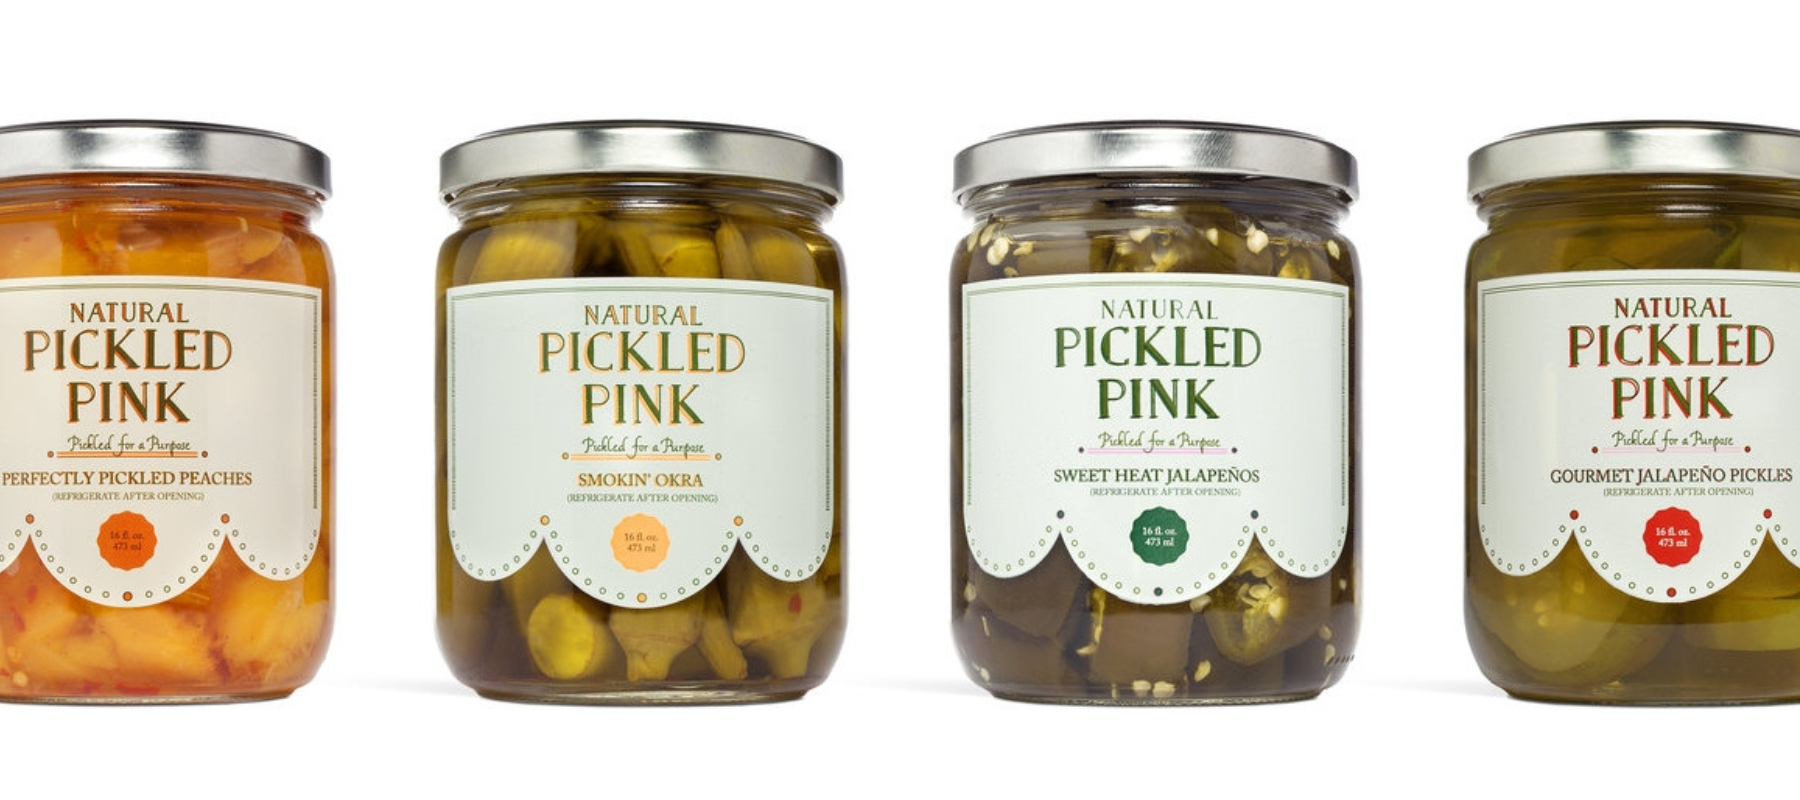 Meet the Makers: Charlie Stephenson & Jim Lawlor of Pickled Pink Foods